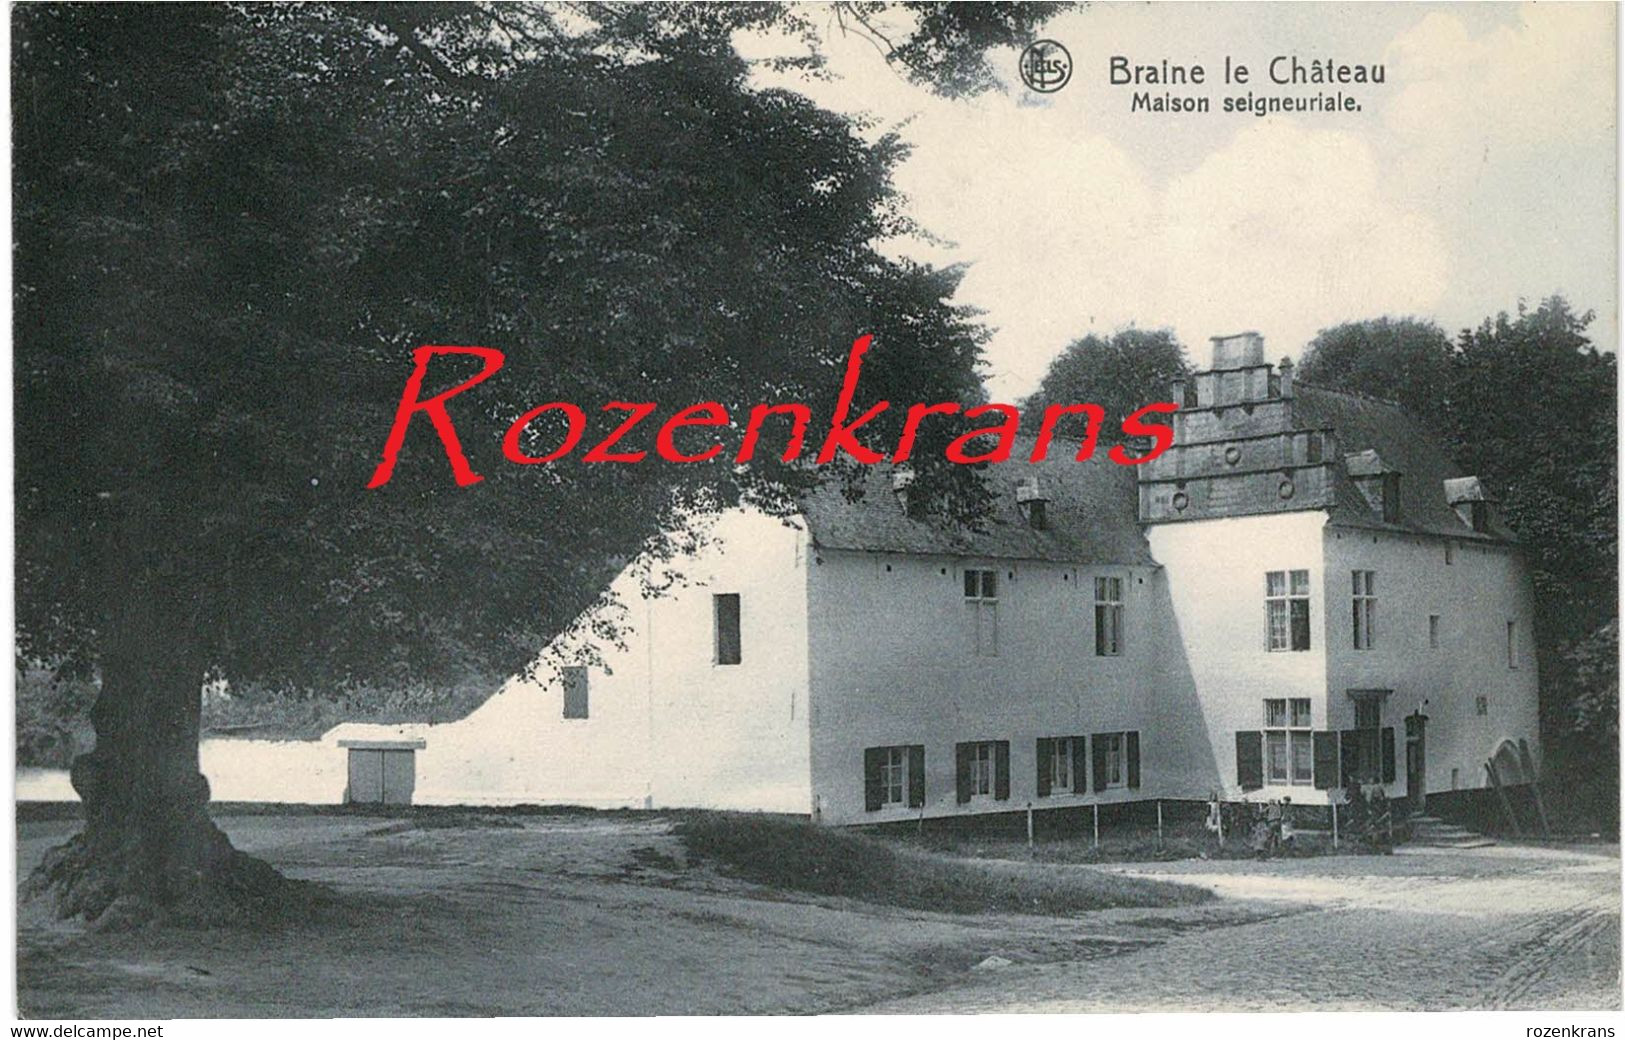 Kasteelbrakel Braine-le-Château Maison Seigneuriale CPA (En Très Bon état) (In Zeer Goede Staat) - Kasteelbrakel